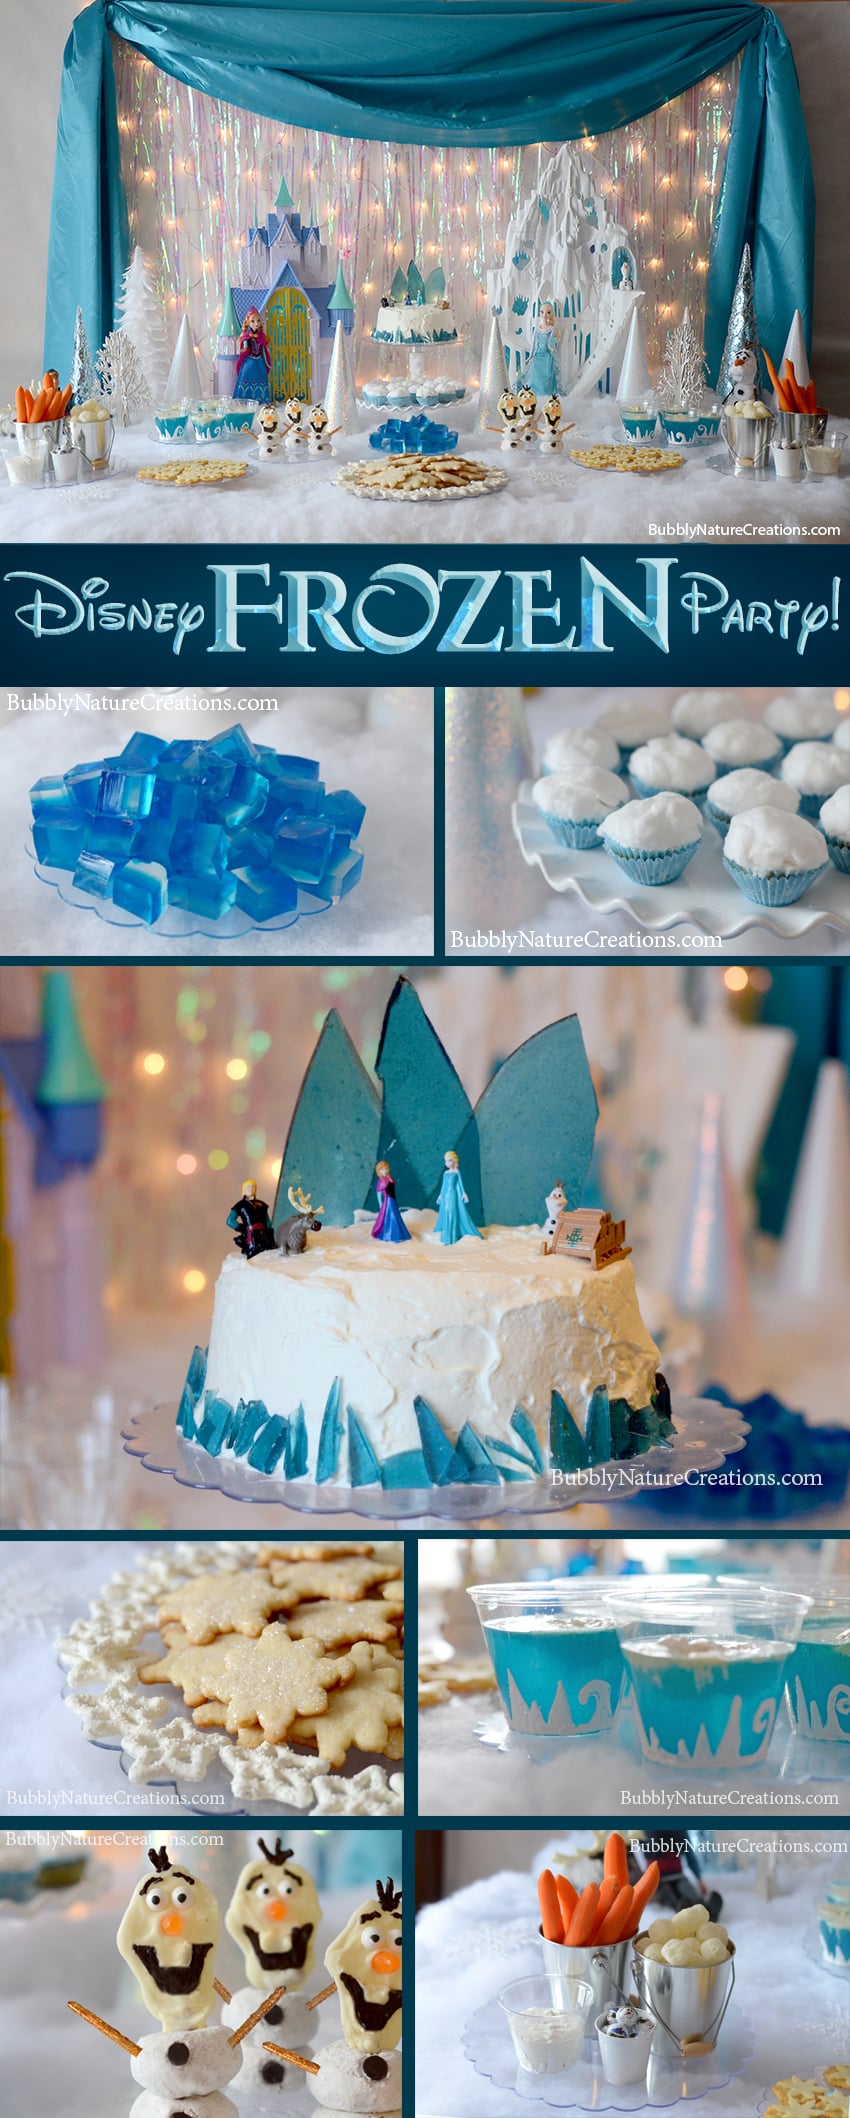 Disney Frozen Party Theme